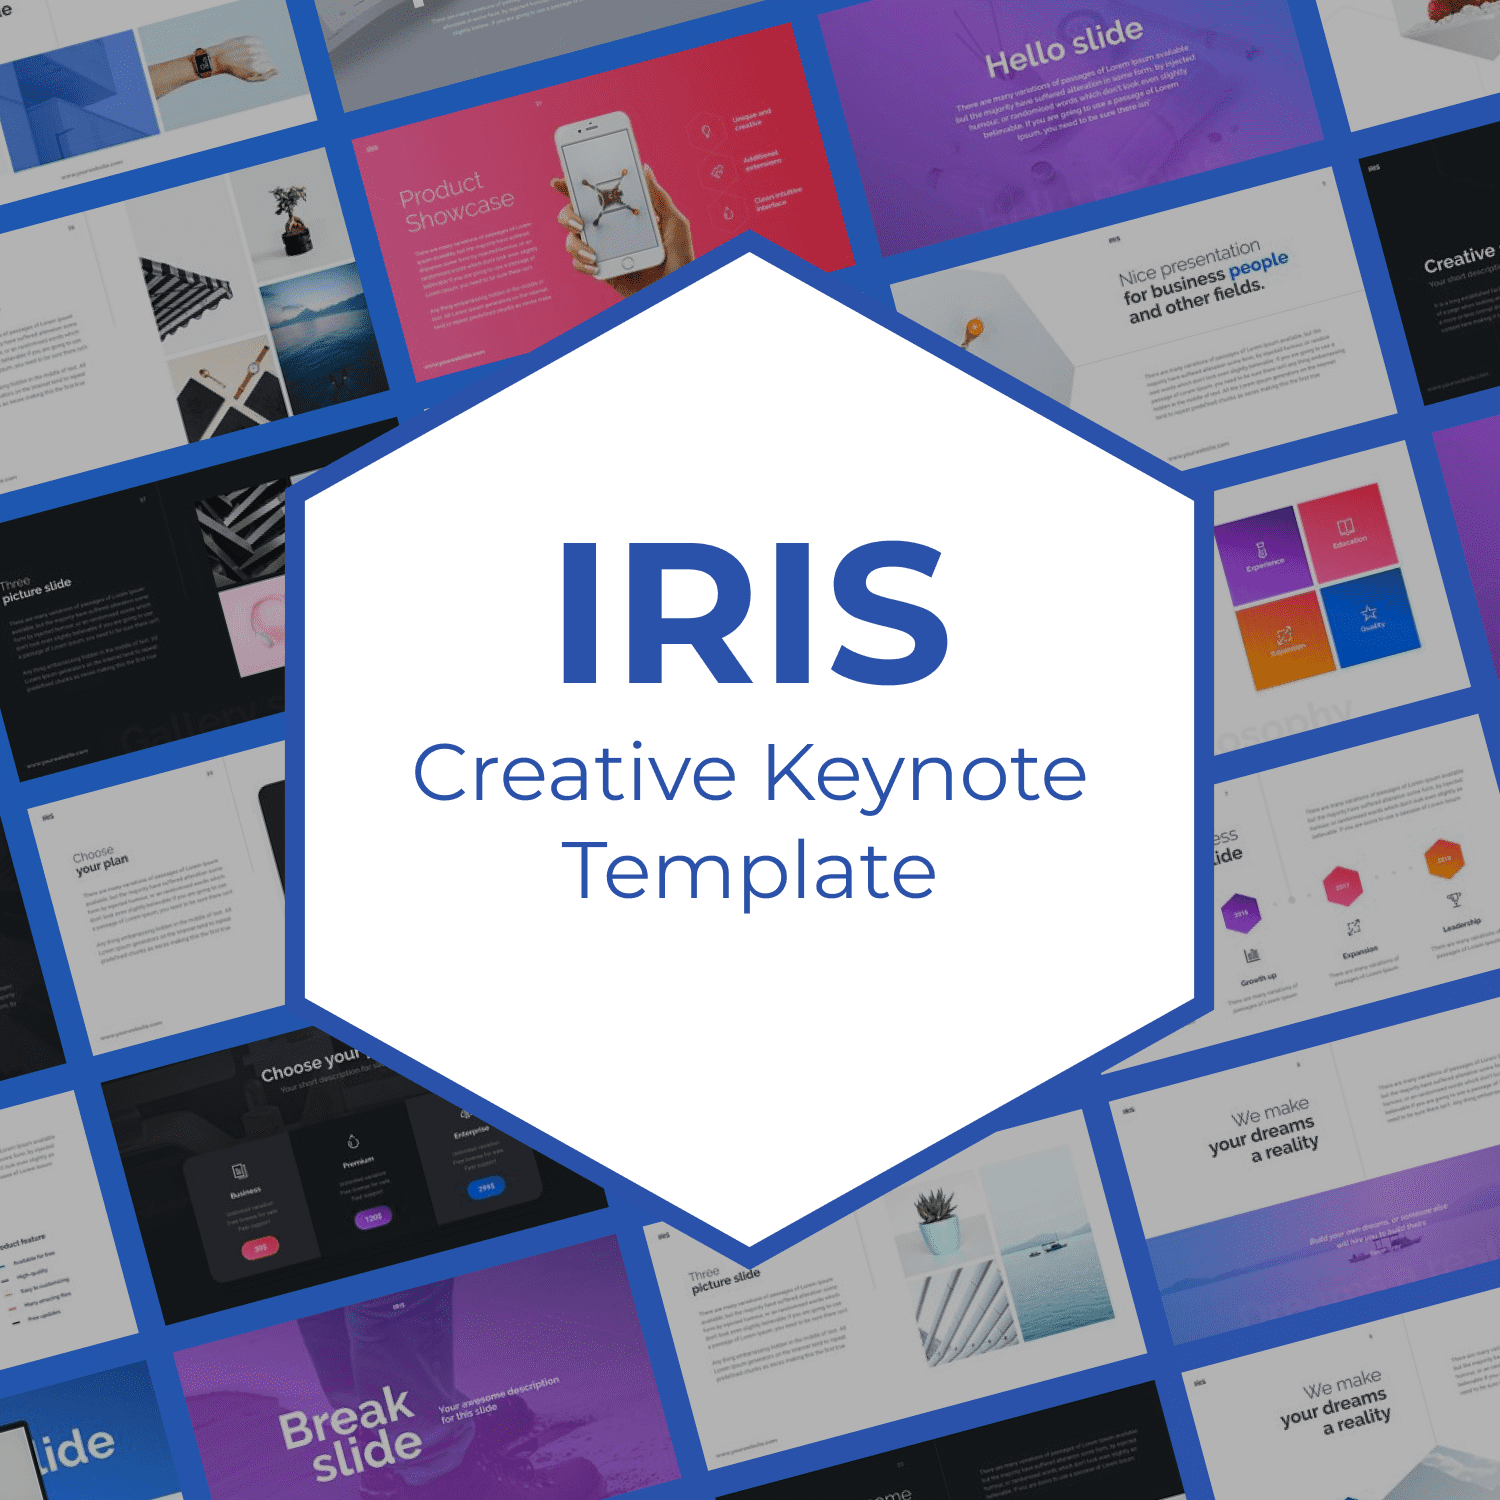 IRIS Creative Keynote Template main cover.